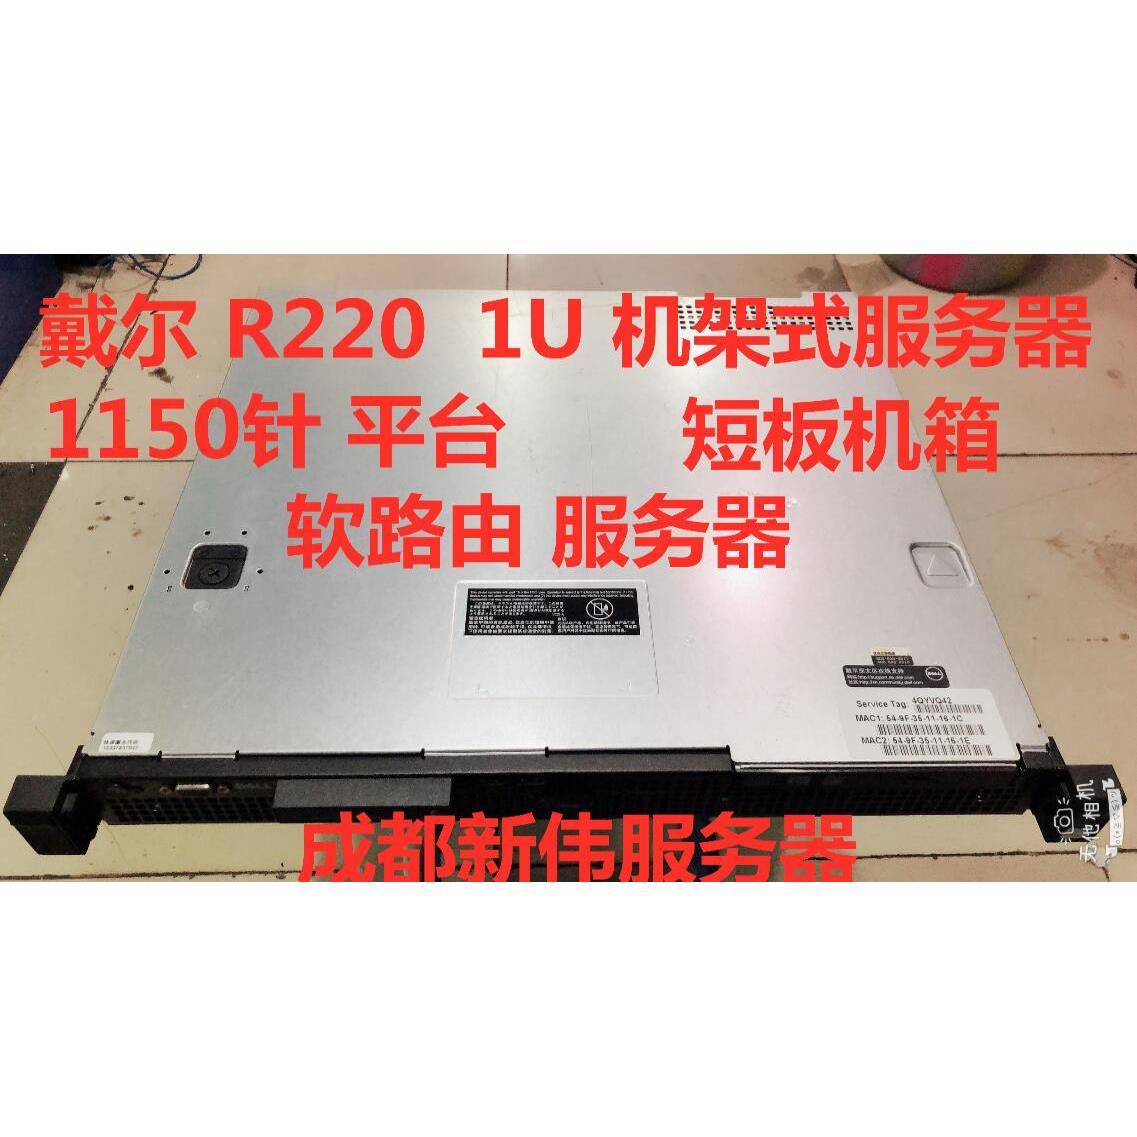 / R220 服务器 1U 机架式刀片准系统PowerEdge R220 R320